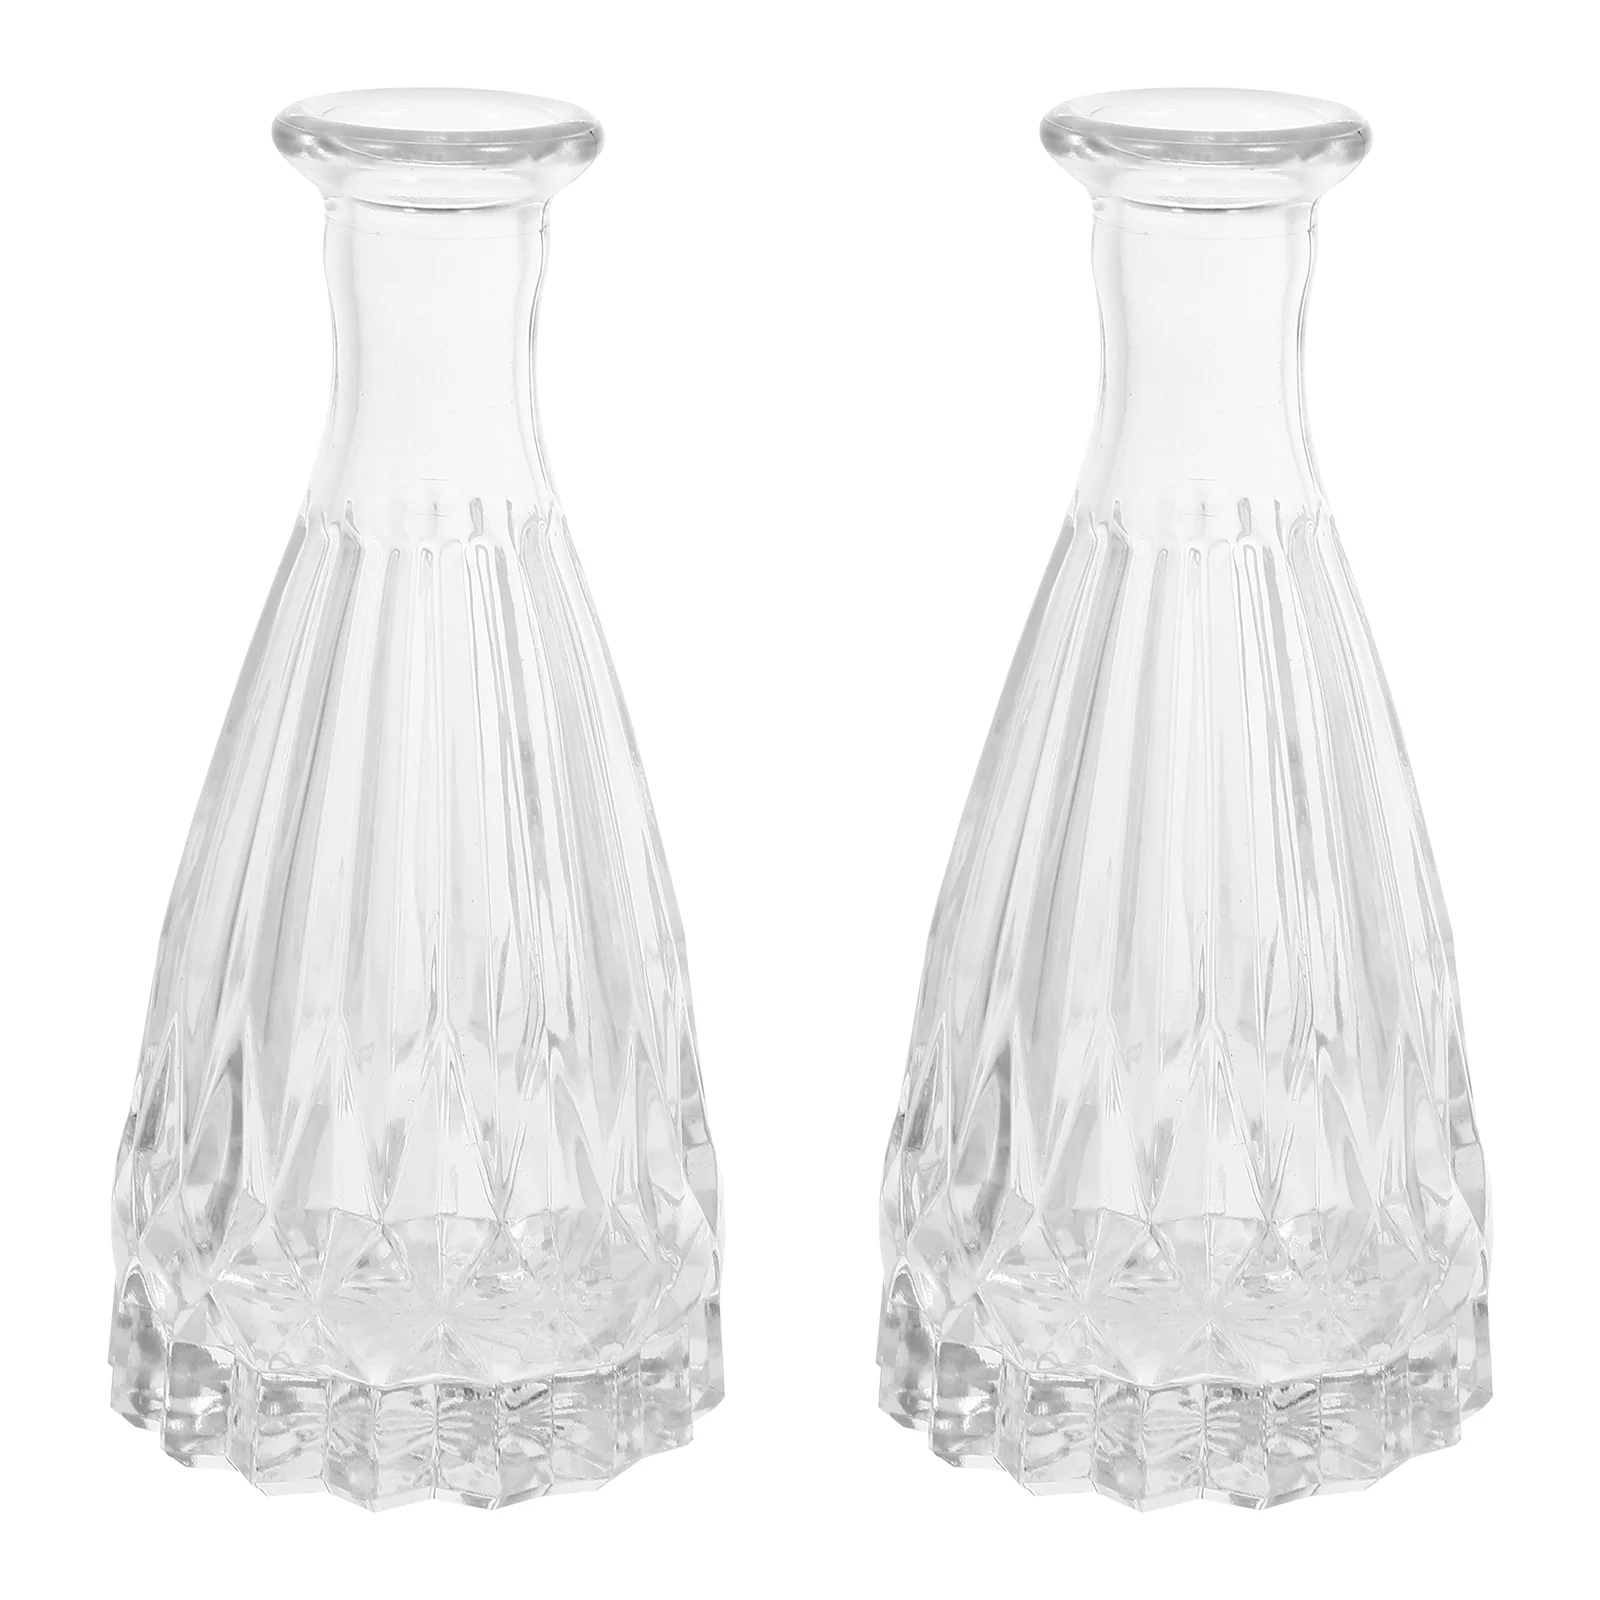 

2 Pcs Aromatherapy Diffuser Jar Vintage Home Decor Modern Vase Desktop Decor Aromatherapy Glass Bottle Household Glass Pot